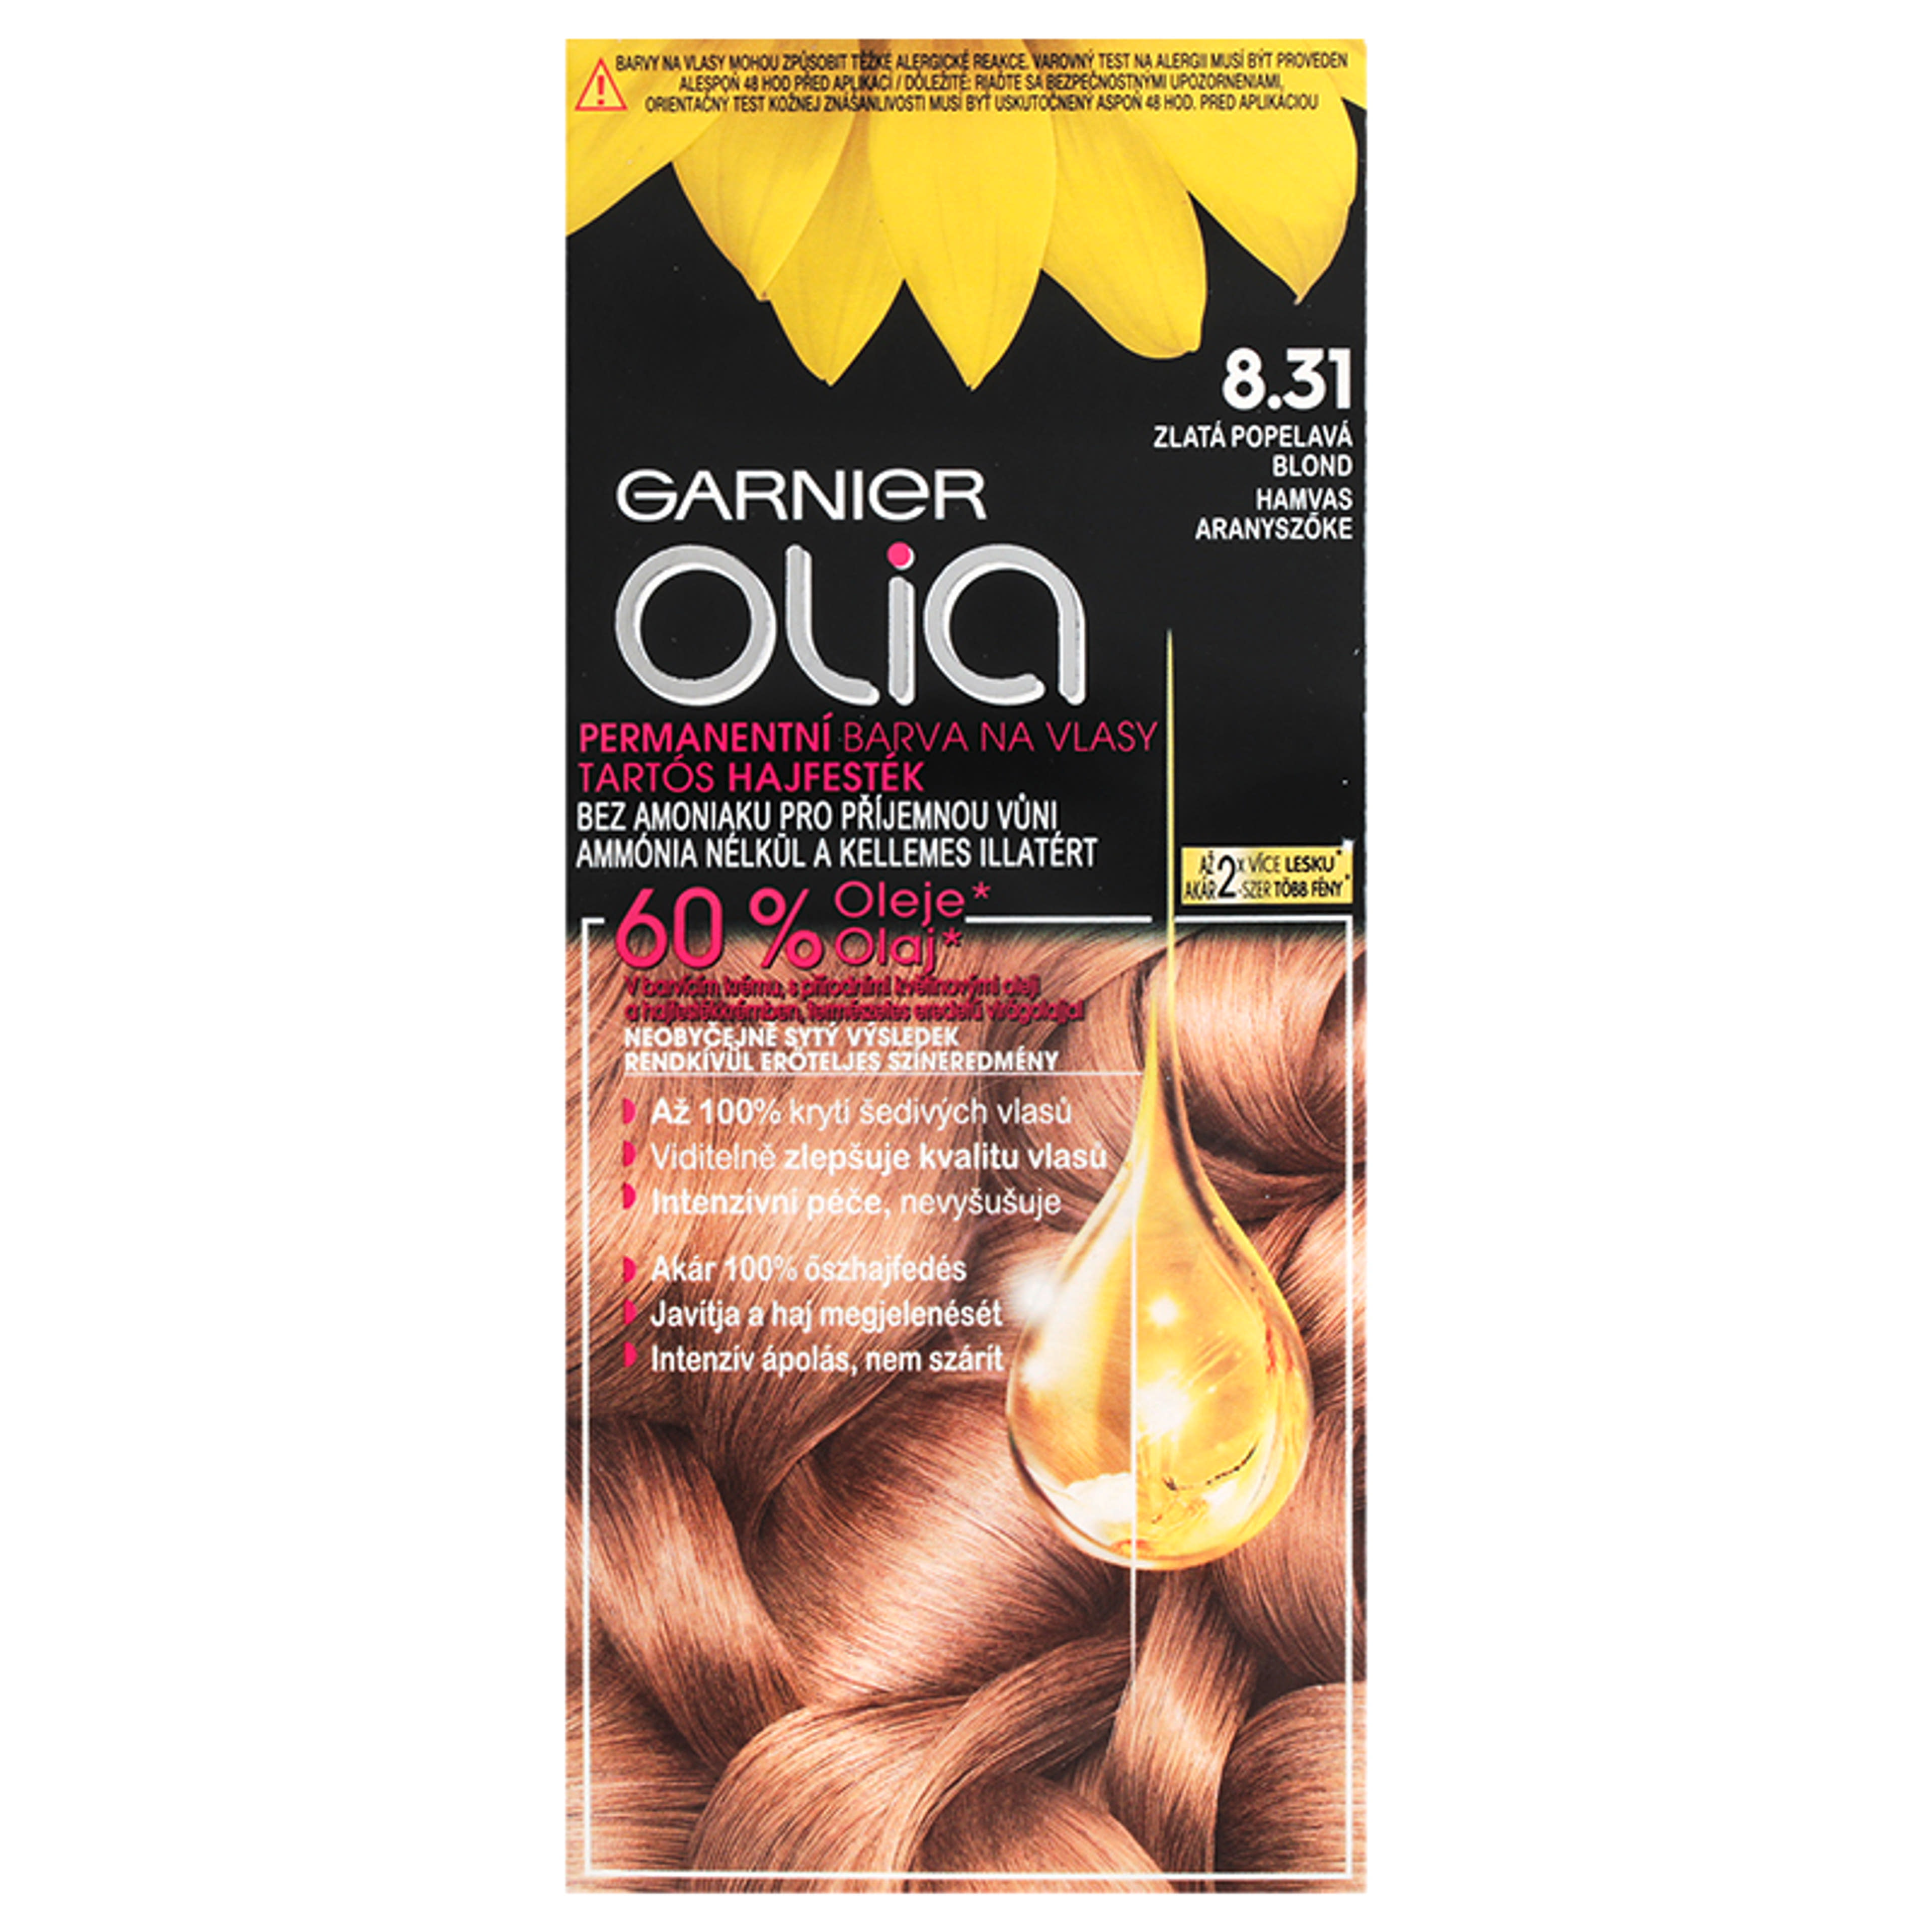 Garnier Olia tartós hajfesték 8.31 Hamvas aranyszőke - 1 db-2